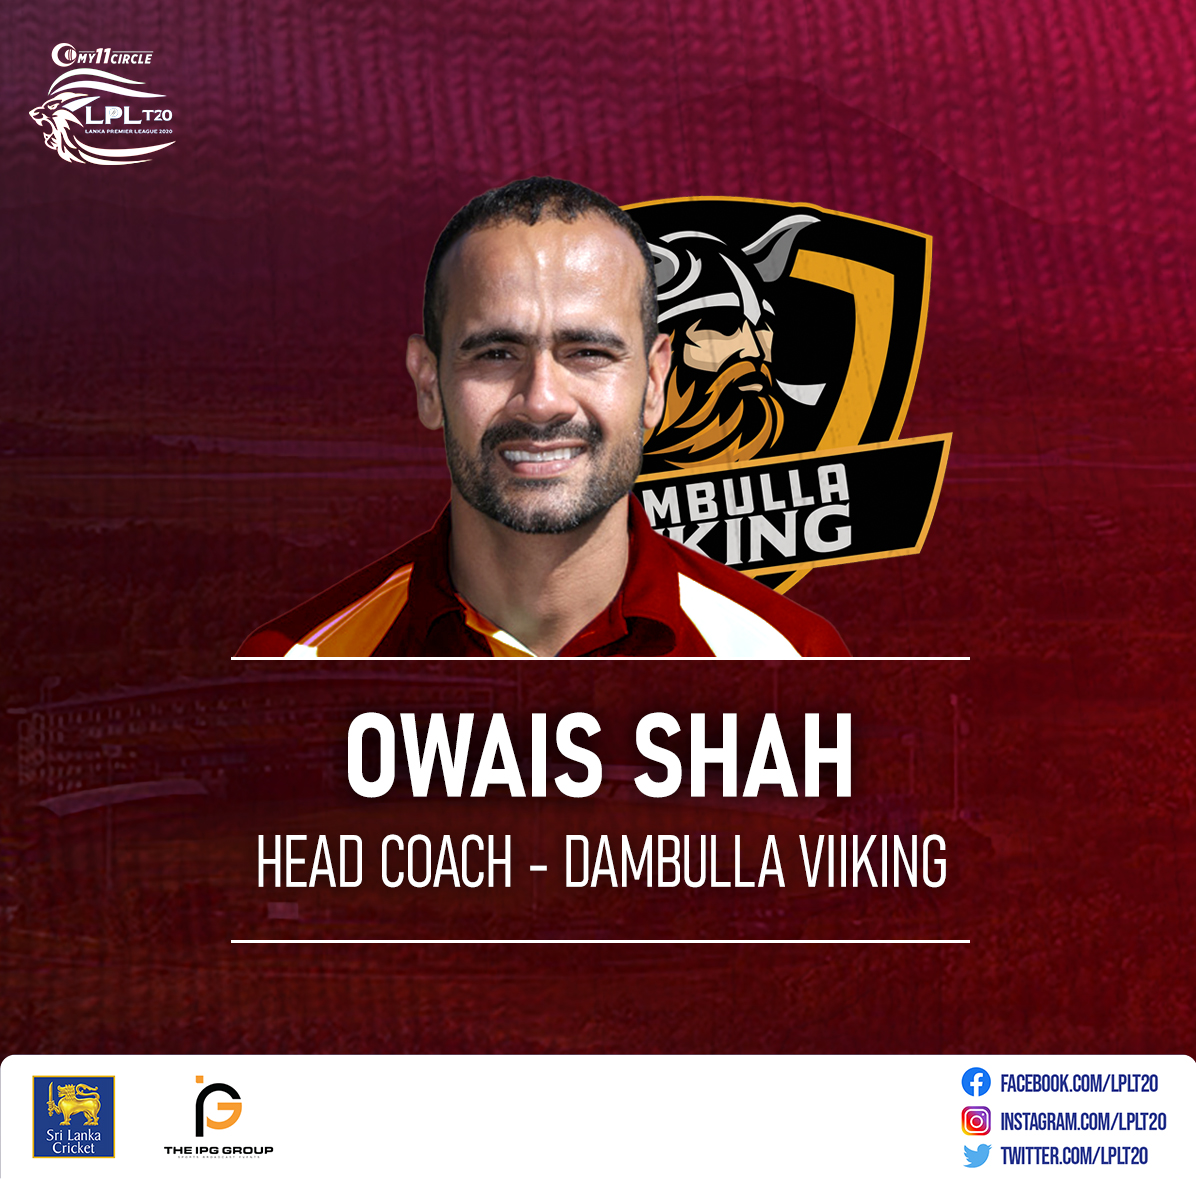 Ex-England batsman Owais Shah packs loads of experience  as Head Coach of Dambulla Vikings